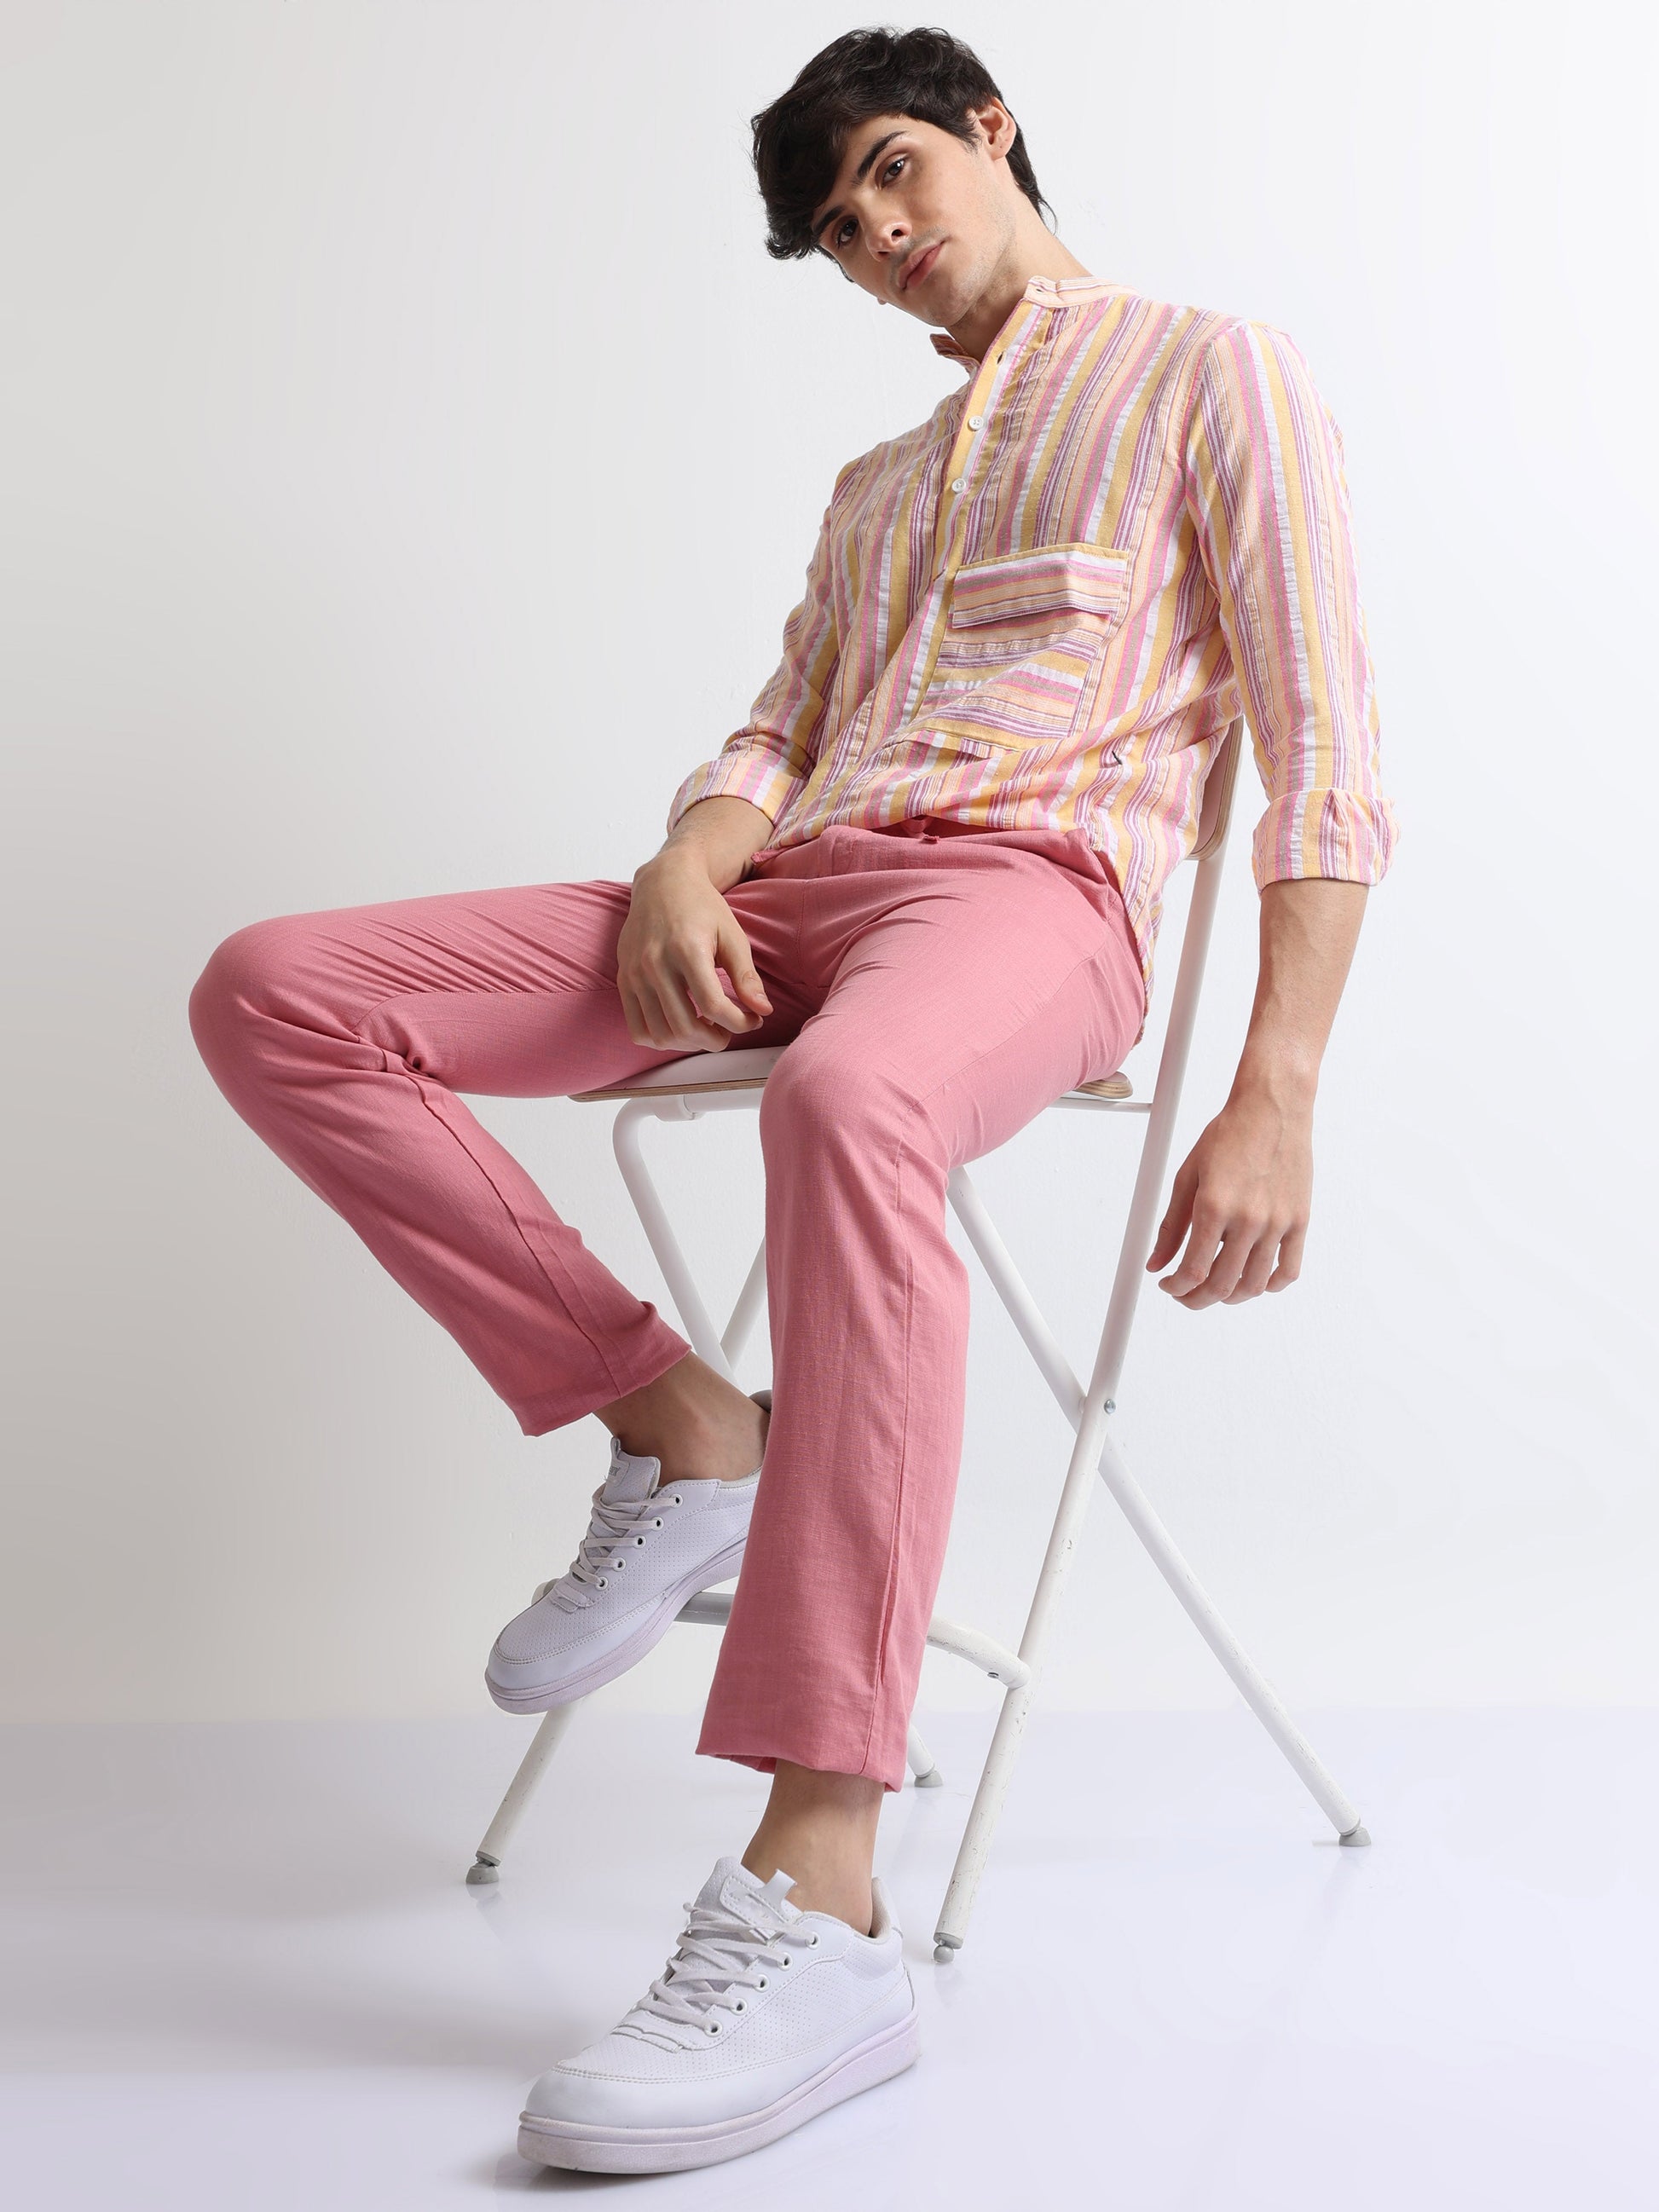 Peach Men's Drawcod Linen Fashion Pant